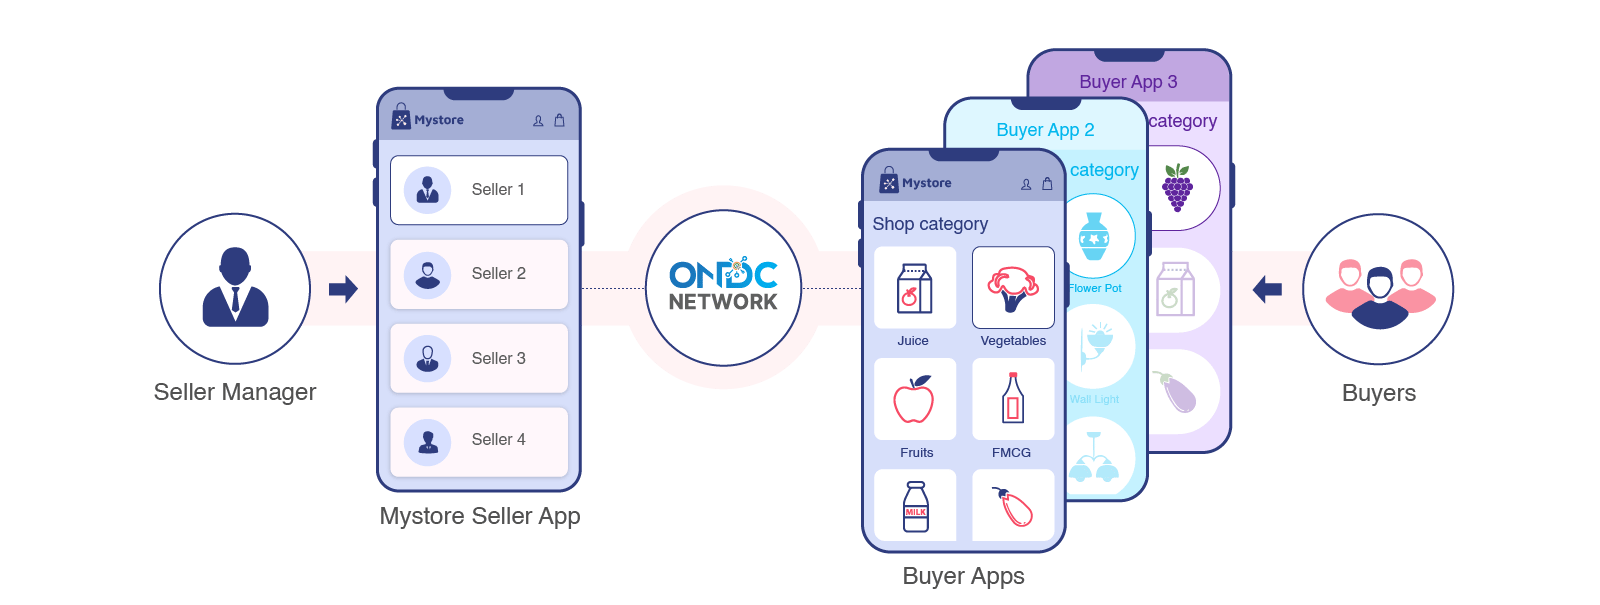 How ONDC Network works for Enterprise Brands